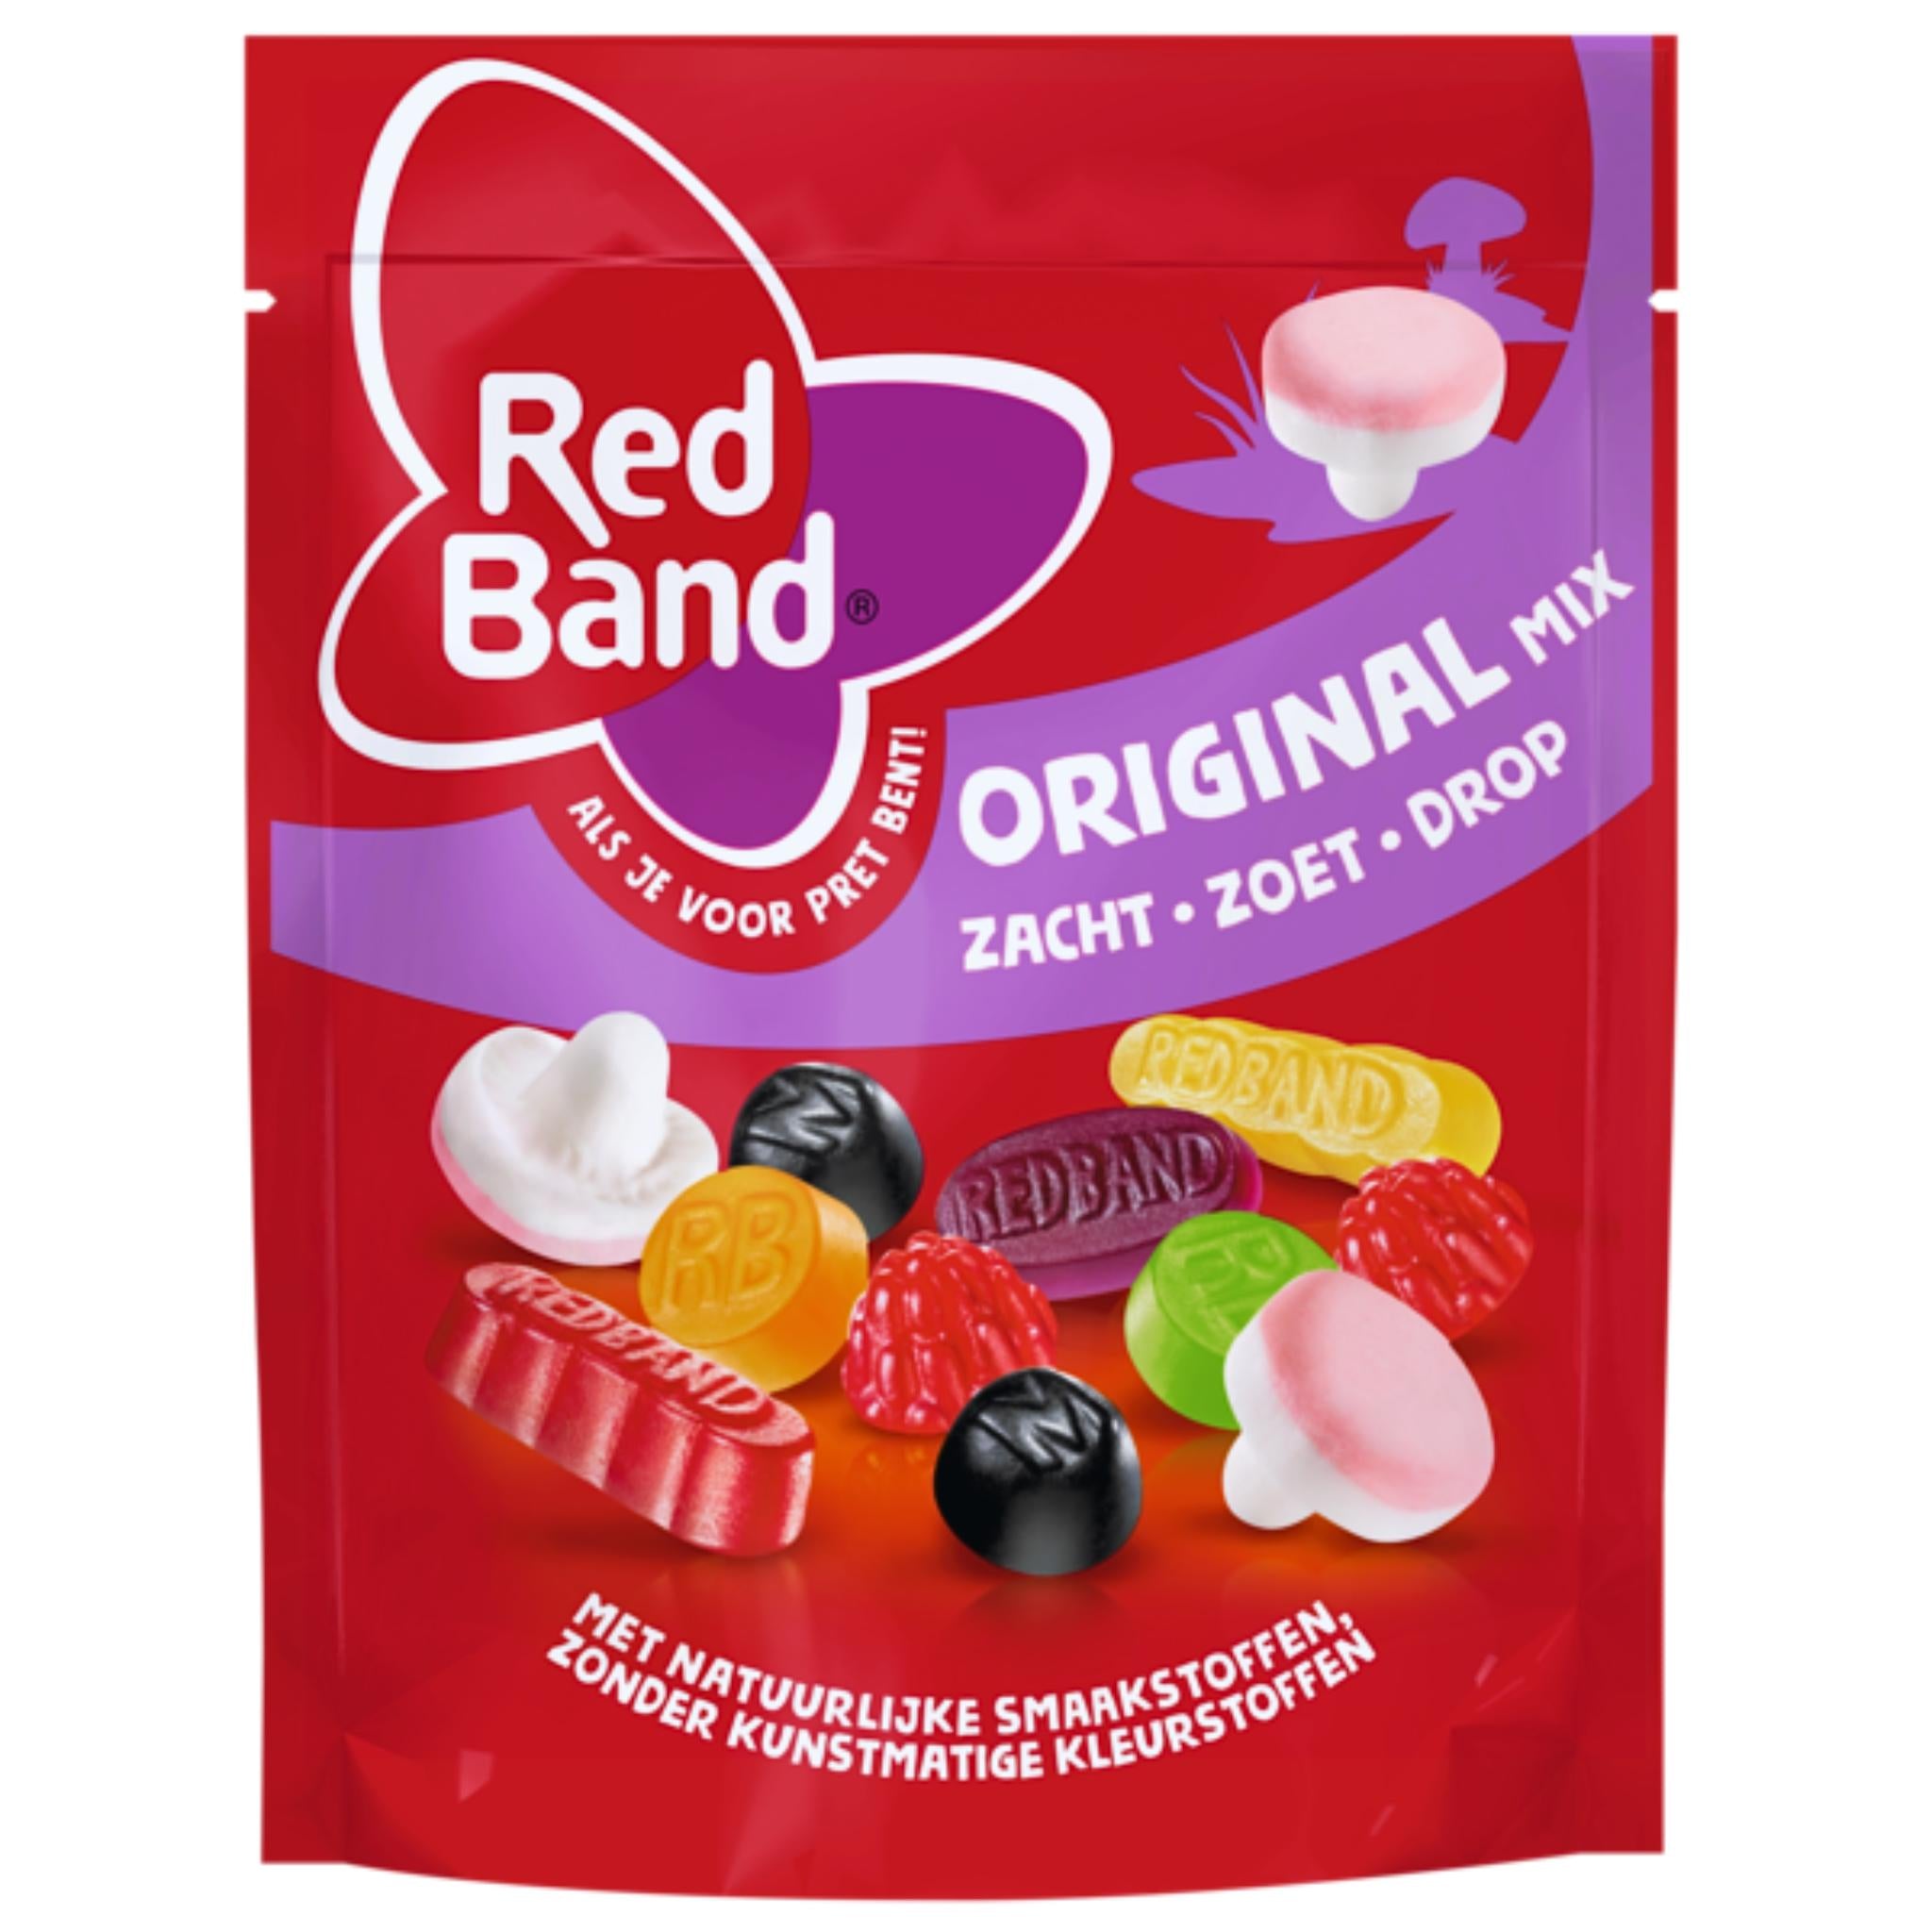 Red Band Snoepmix Original - 220g